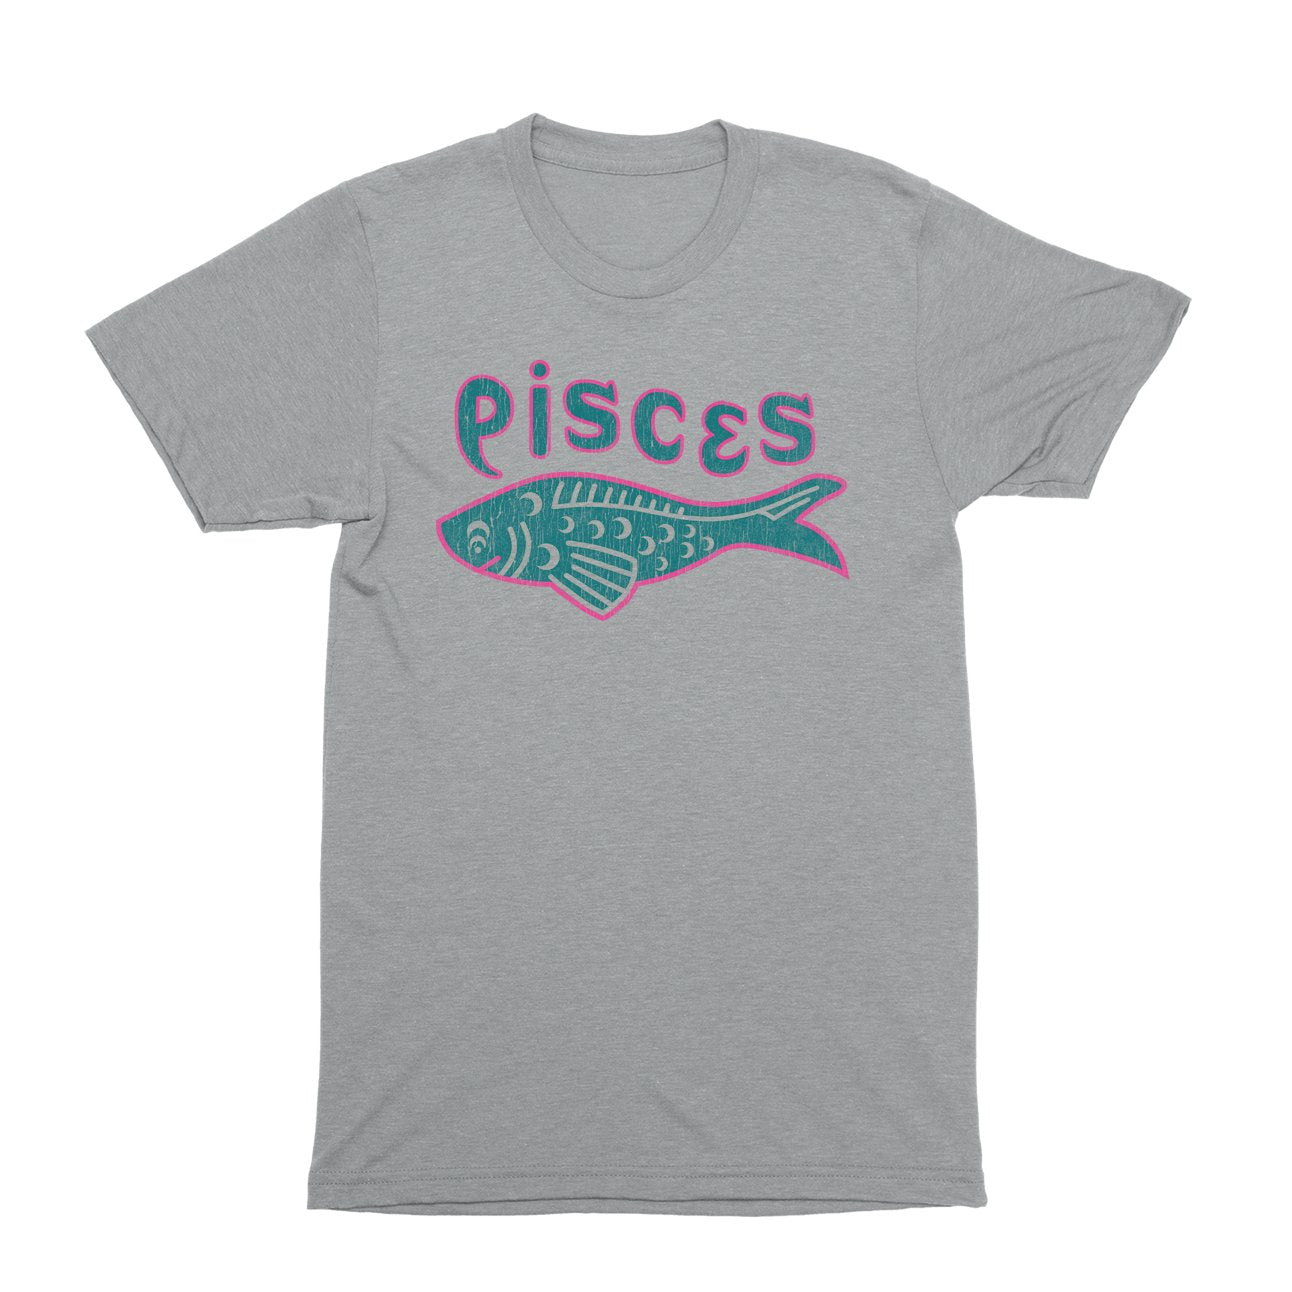 Pittsburgh Pisces T-Shirt - Black Cat MFG -